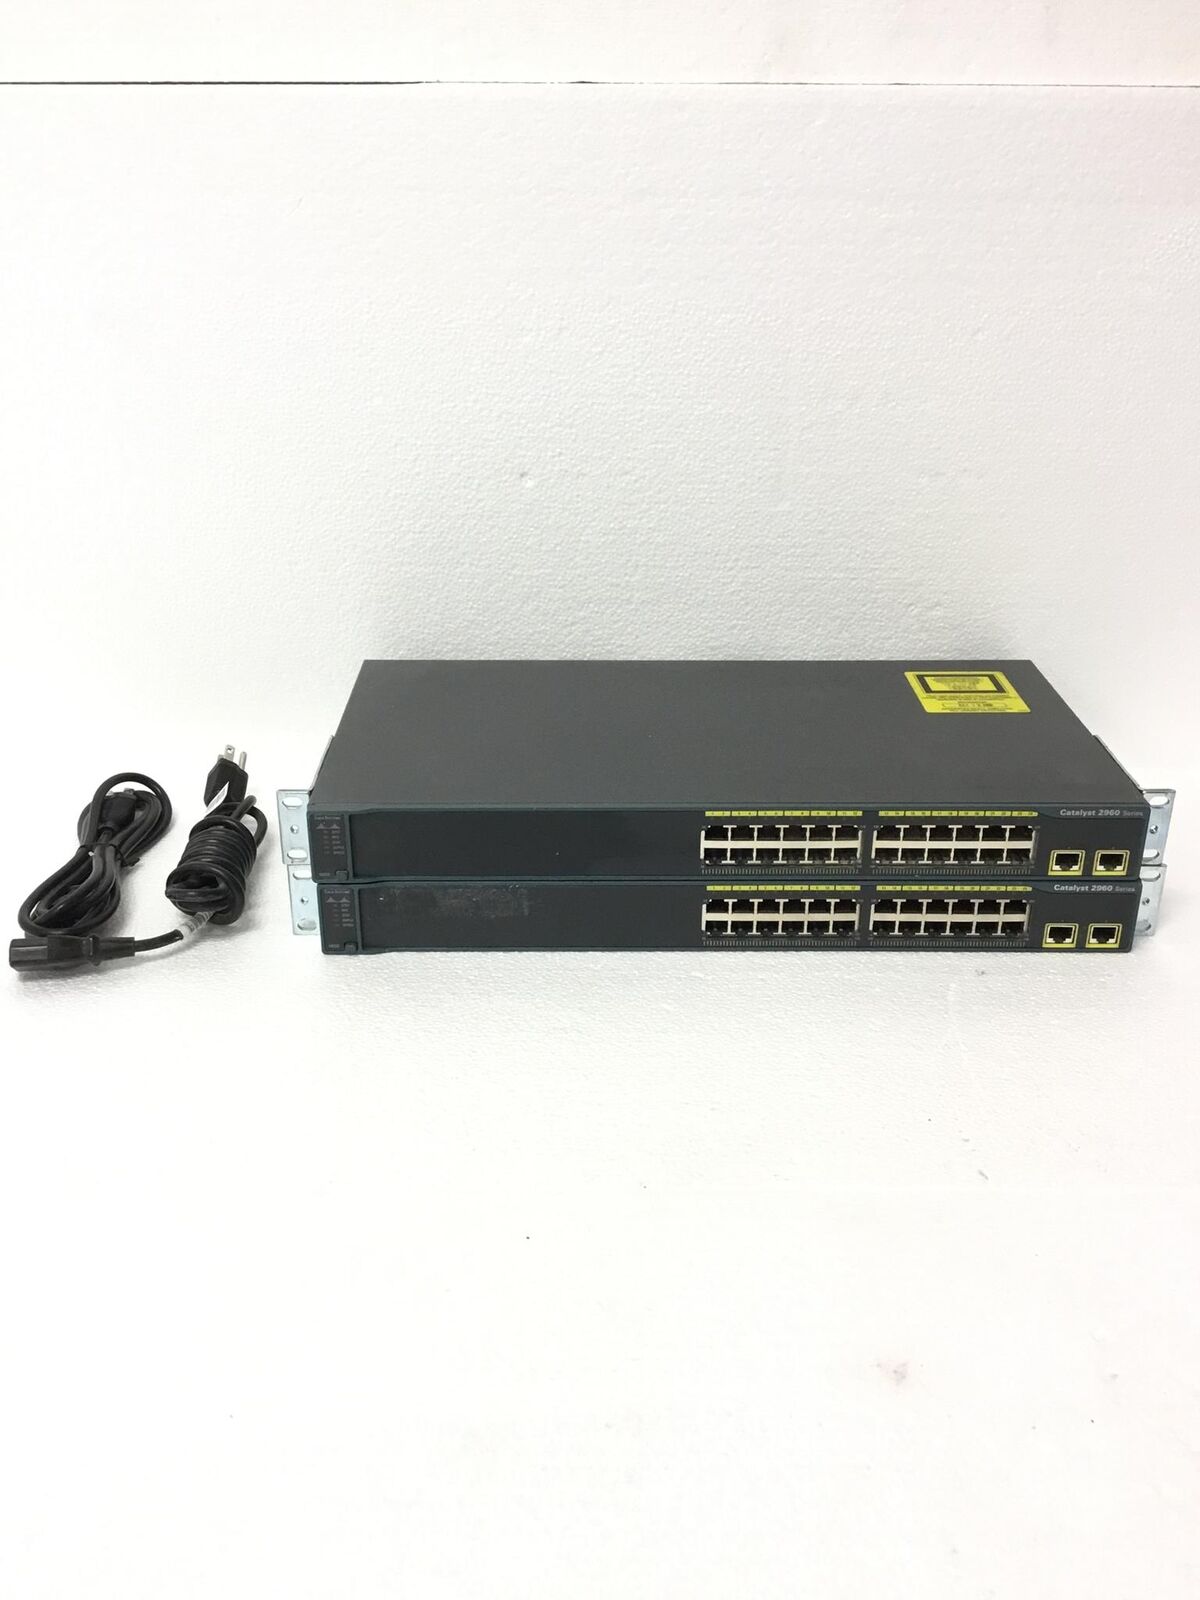 2x Cisco WS-C2960-24TT-L Catalyst 2960 24-Port 10/100 Ethernet Network Switch